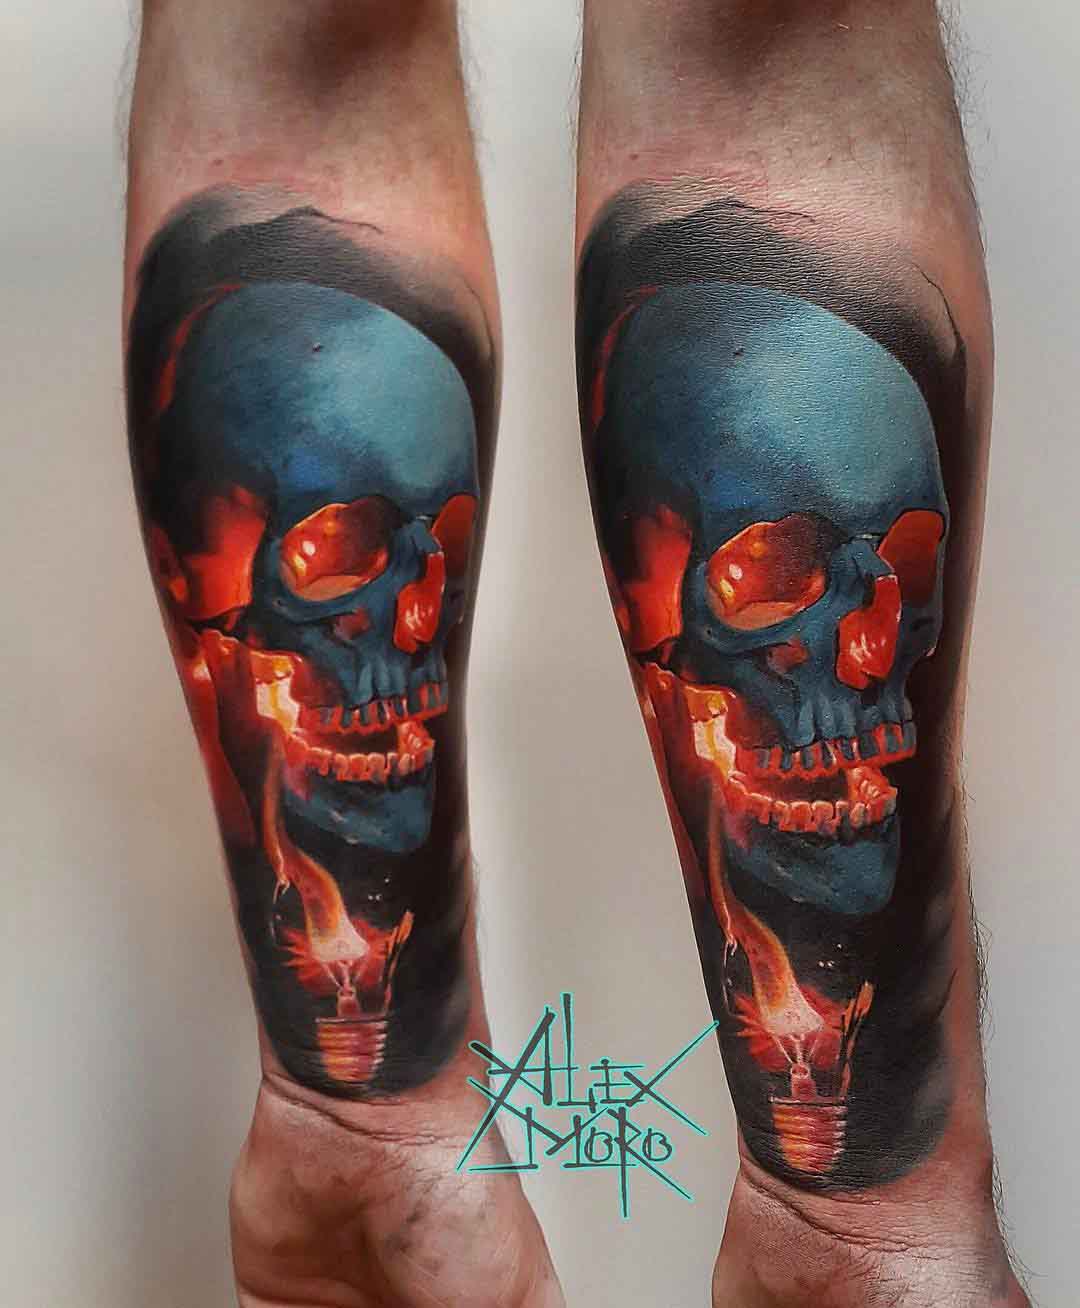 skull tatto on arm and lightbulb